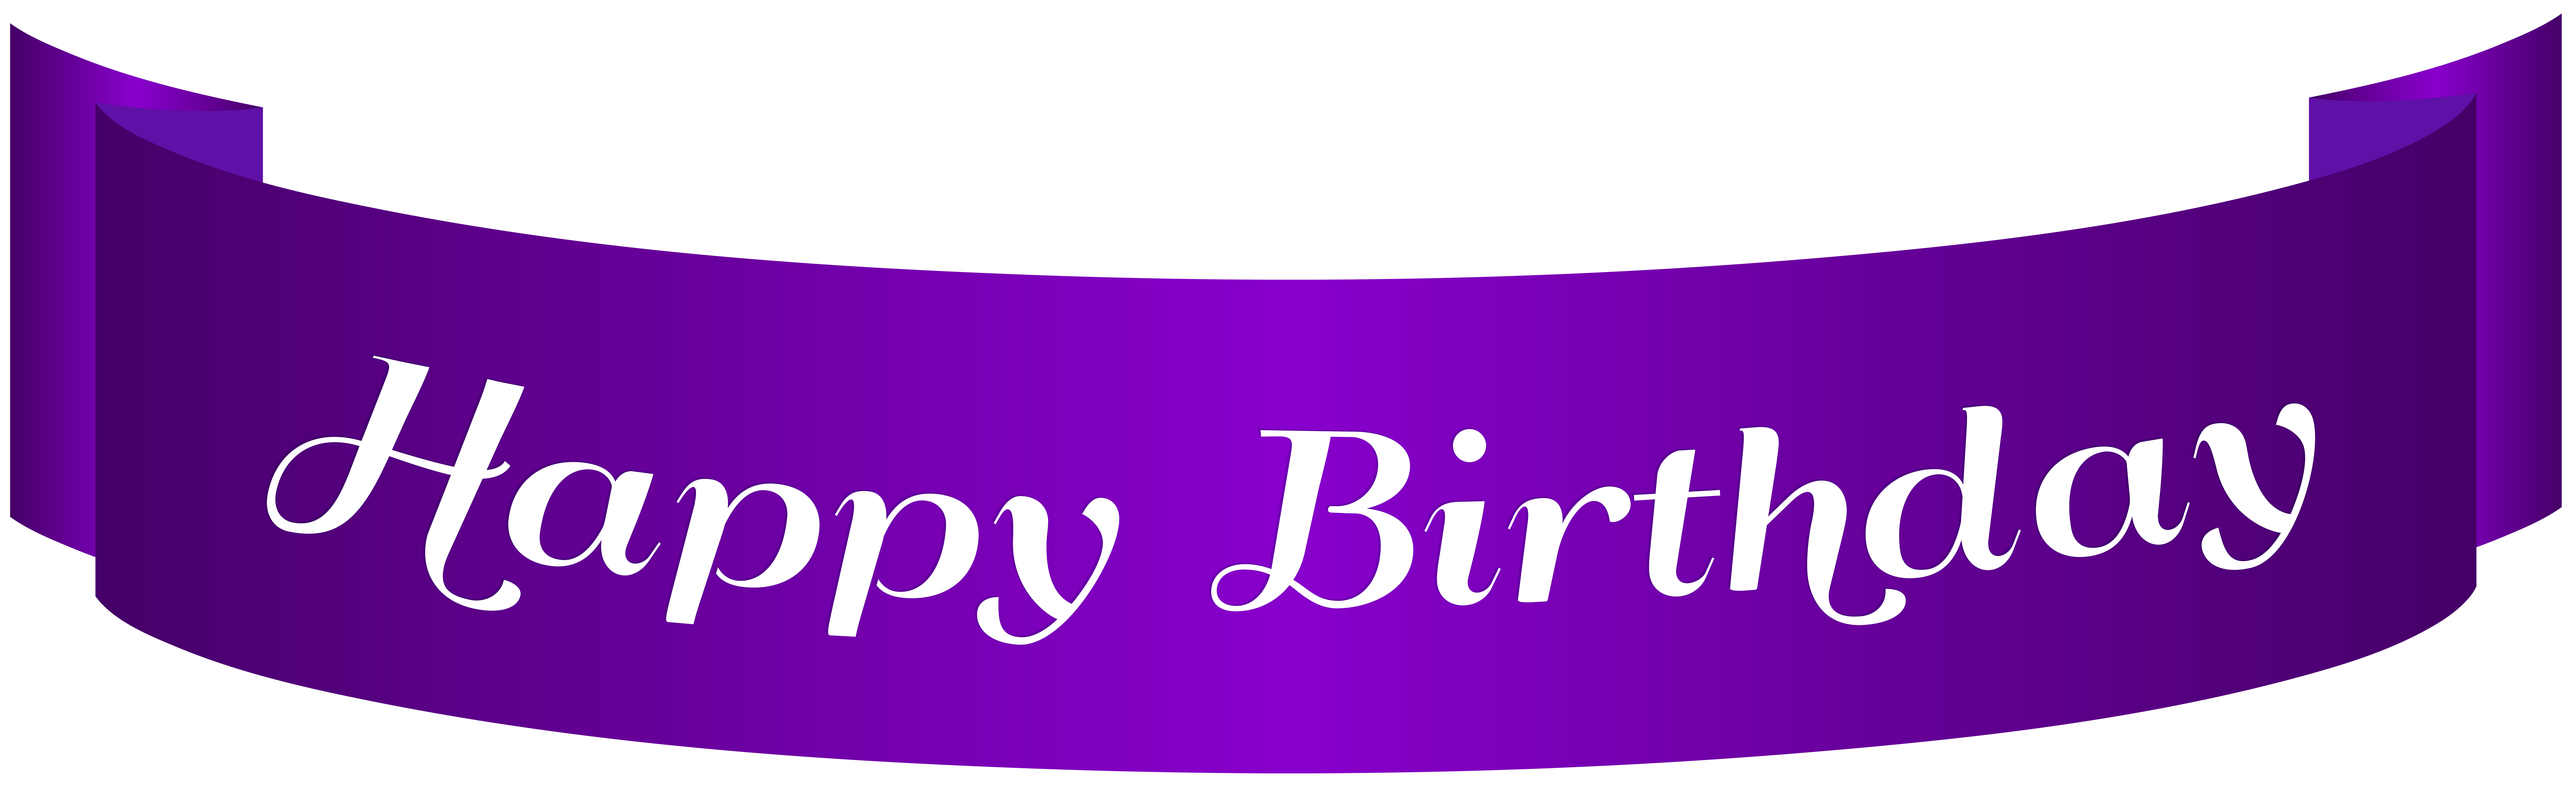 happy-birthday-purple-banner-png-clip-art-gallery-yopriceville-high